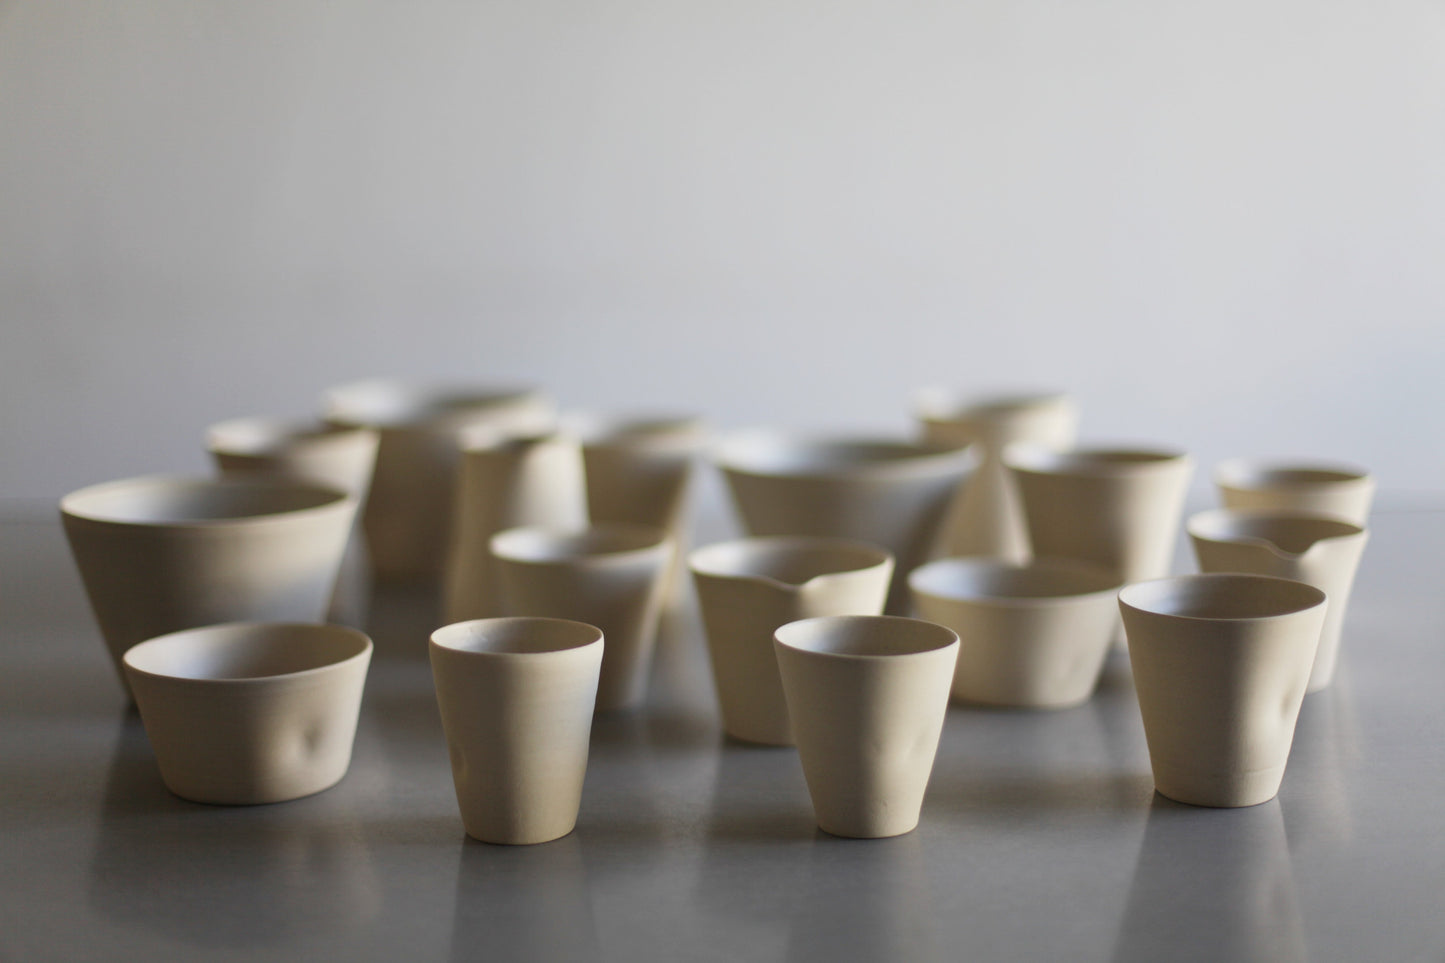 Ceramic pourer, fair cup - stoneware, 200 ml - 6.76 oz